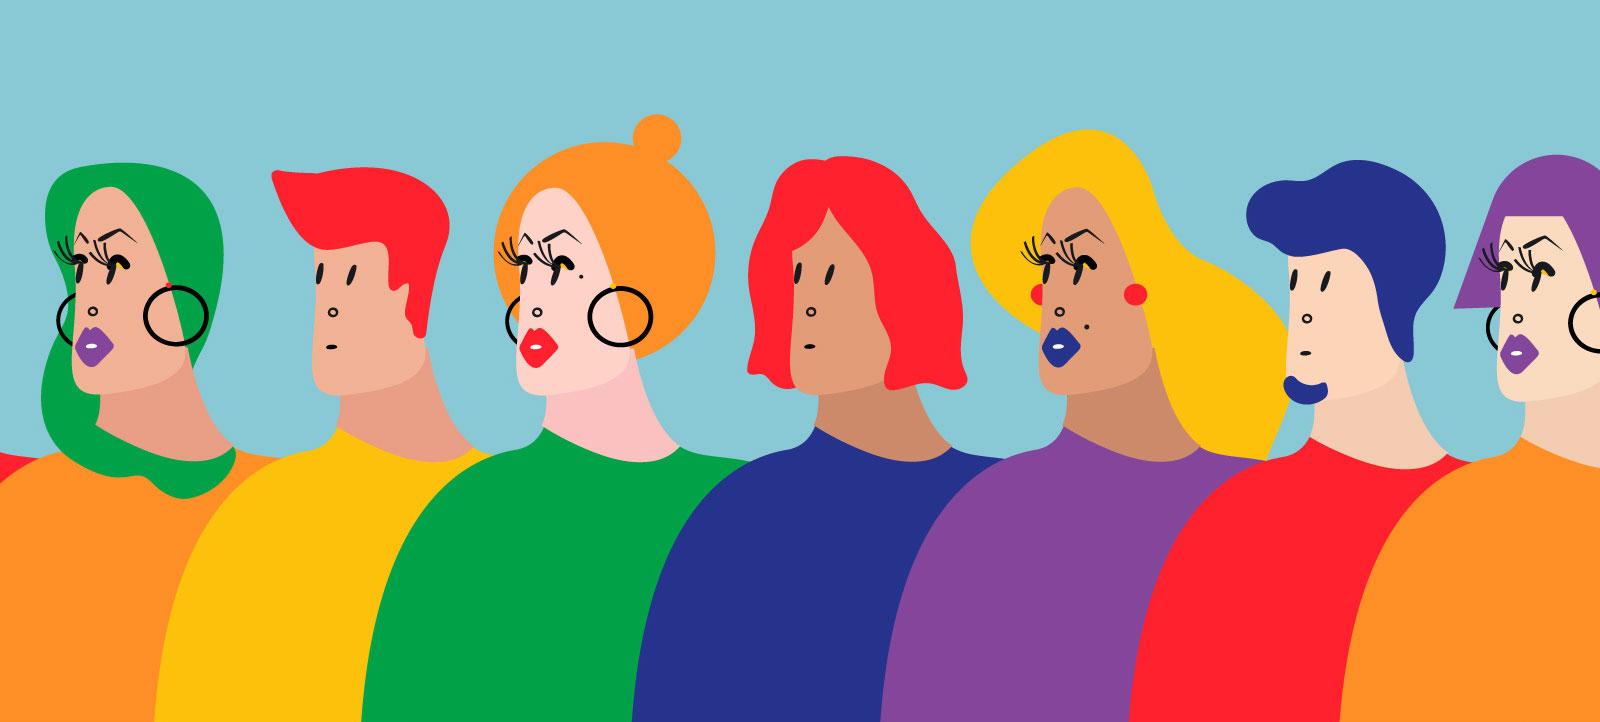 Colorful illustration of LGBTQ individuals